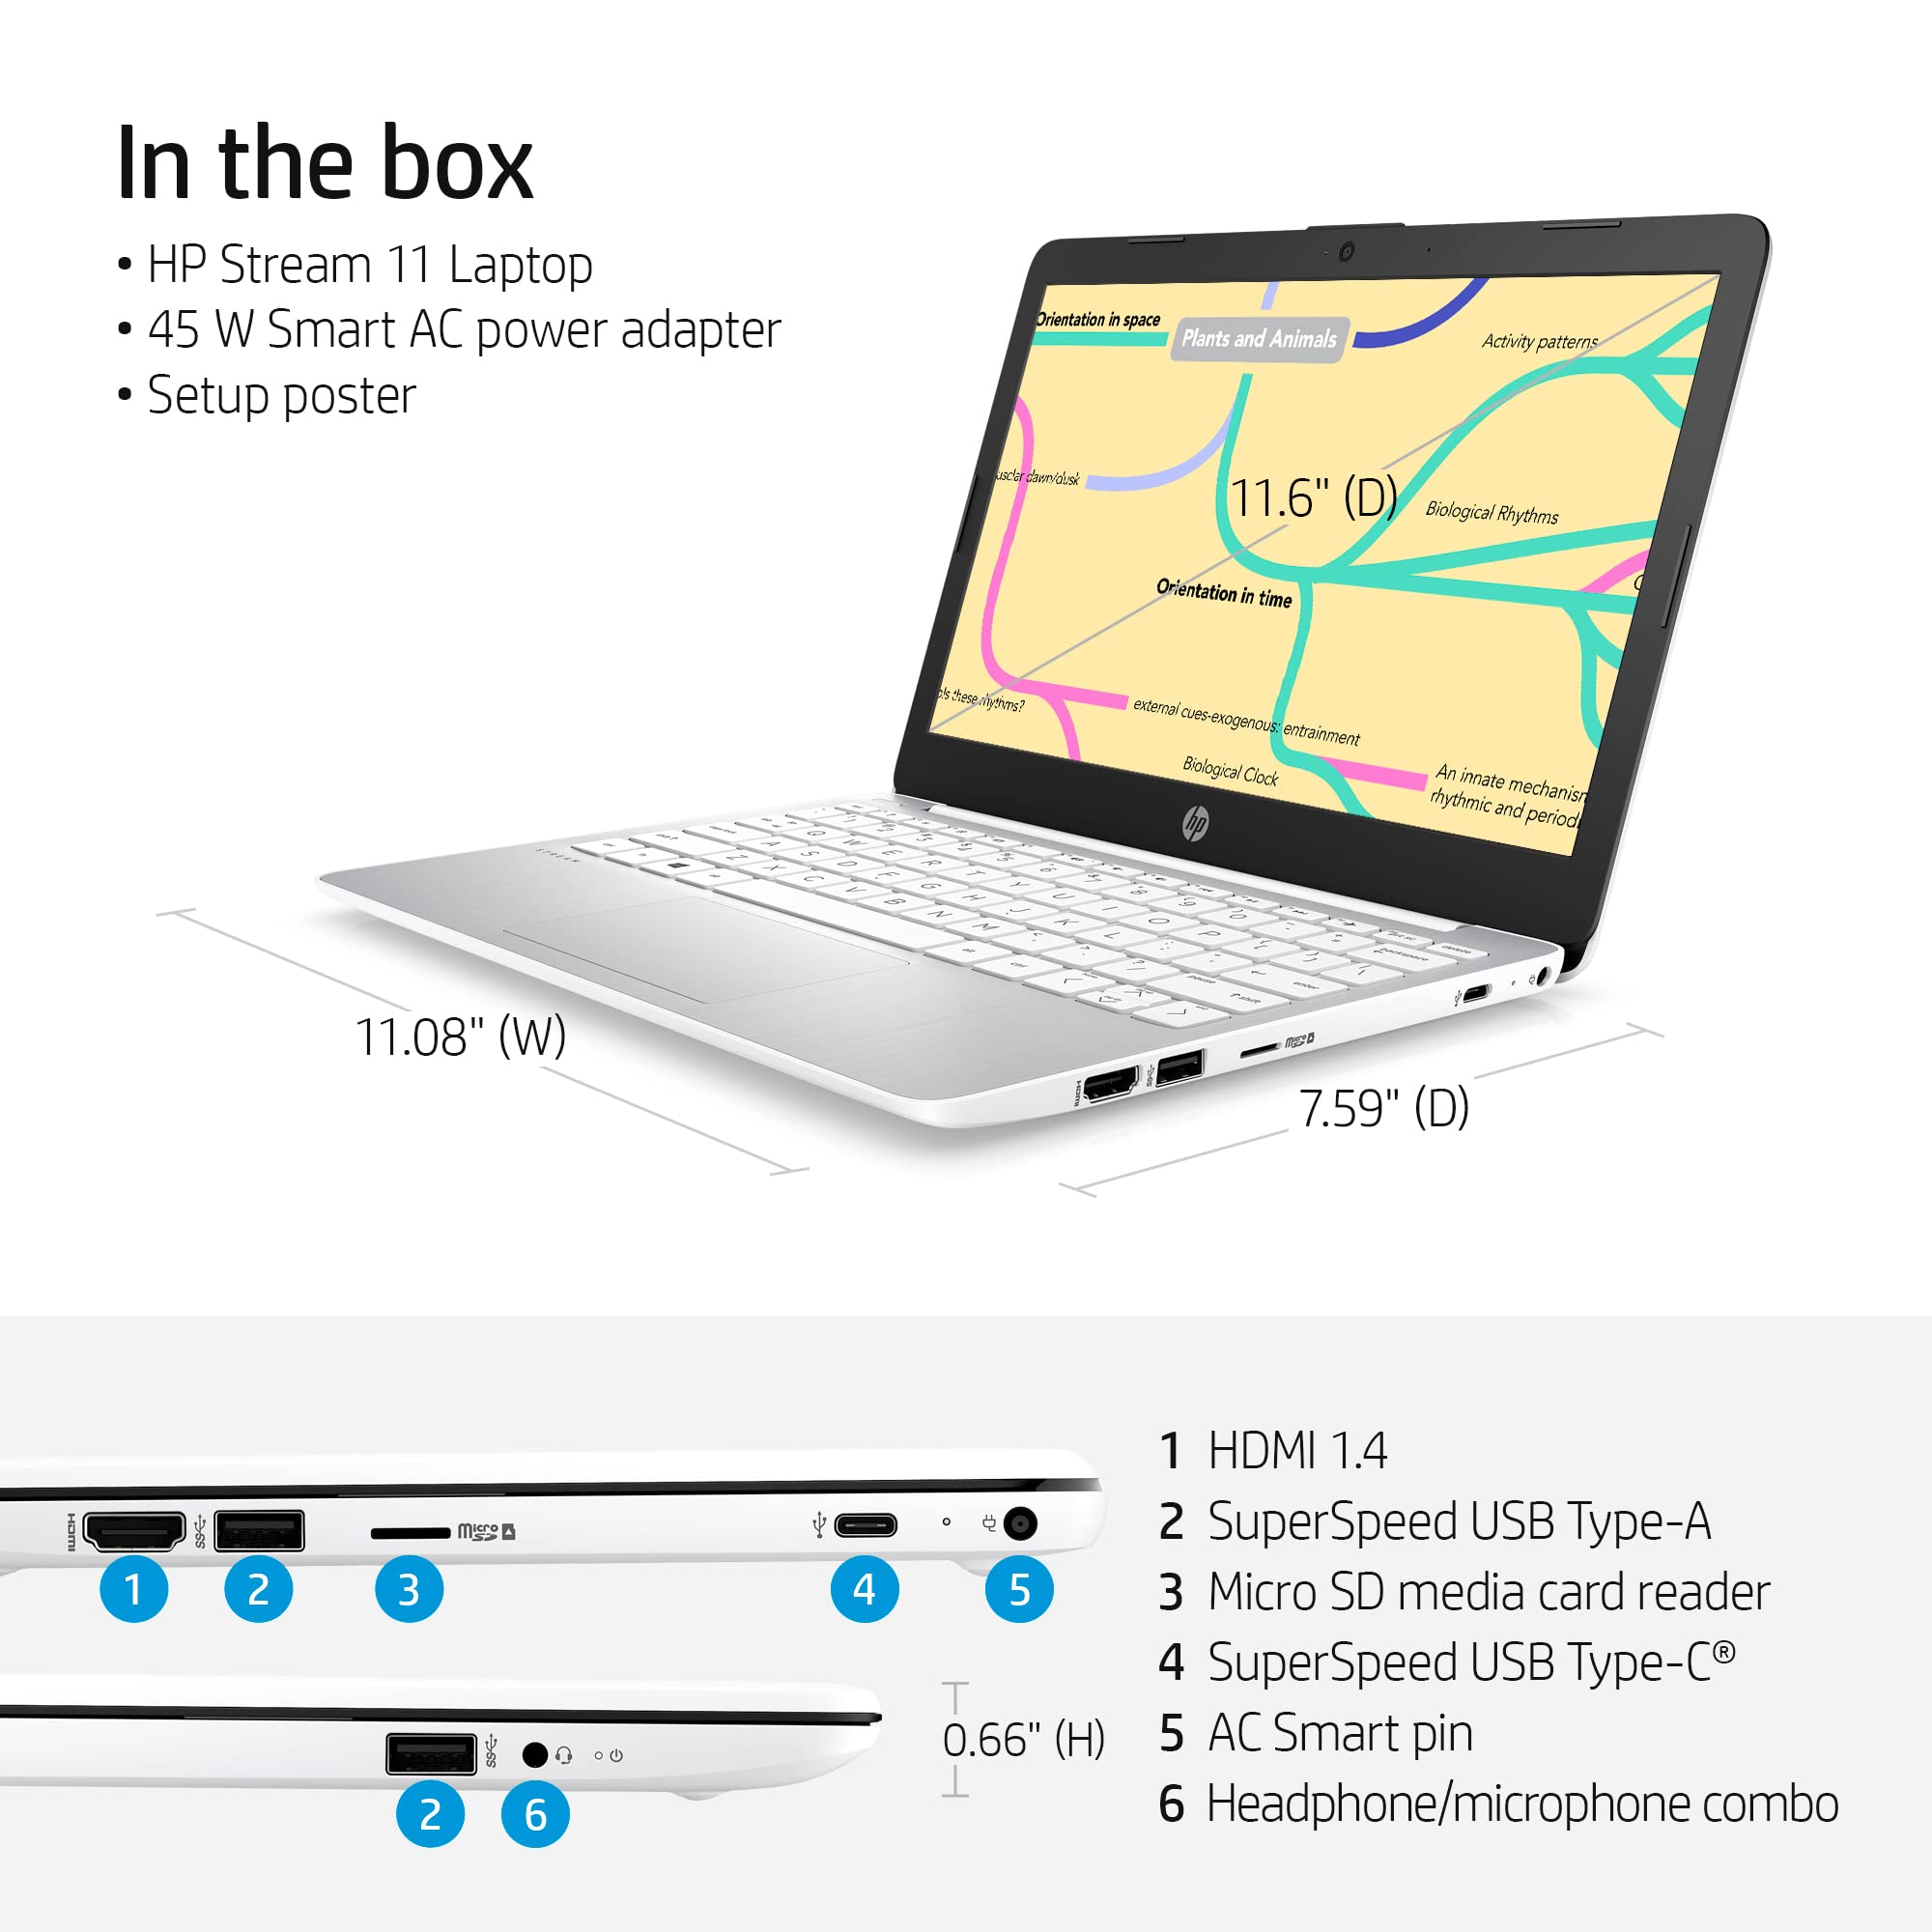 HP Stream laptop power management settings screen